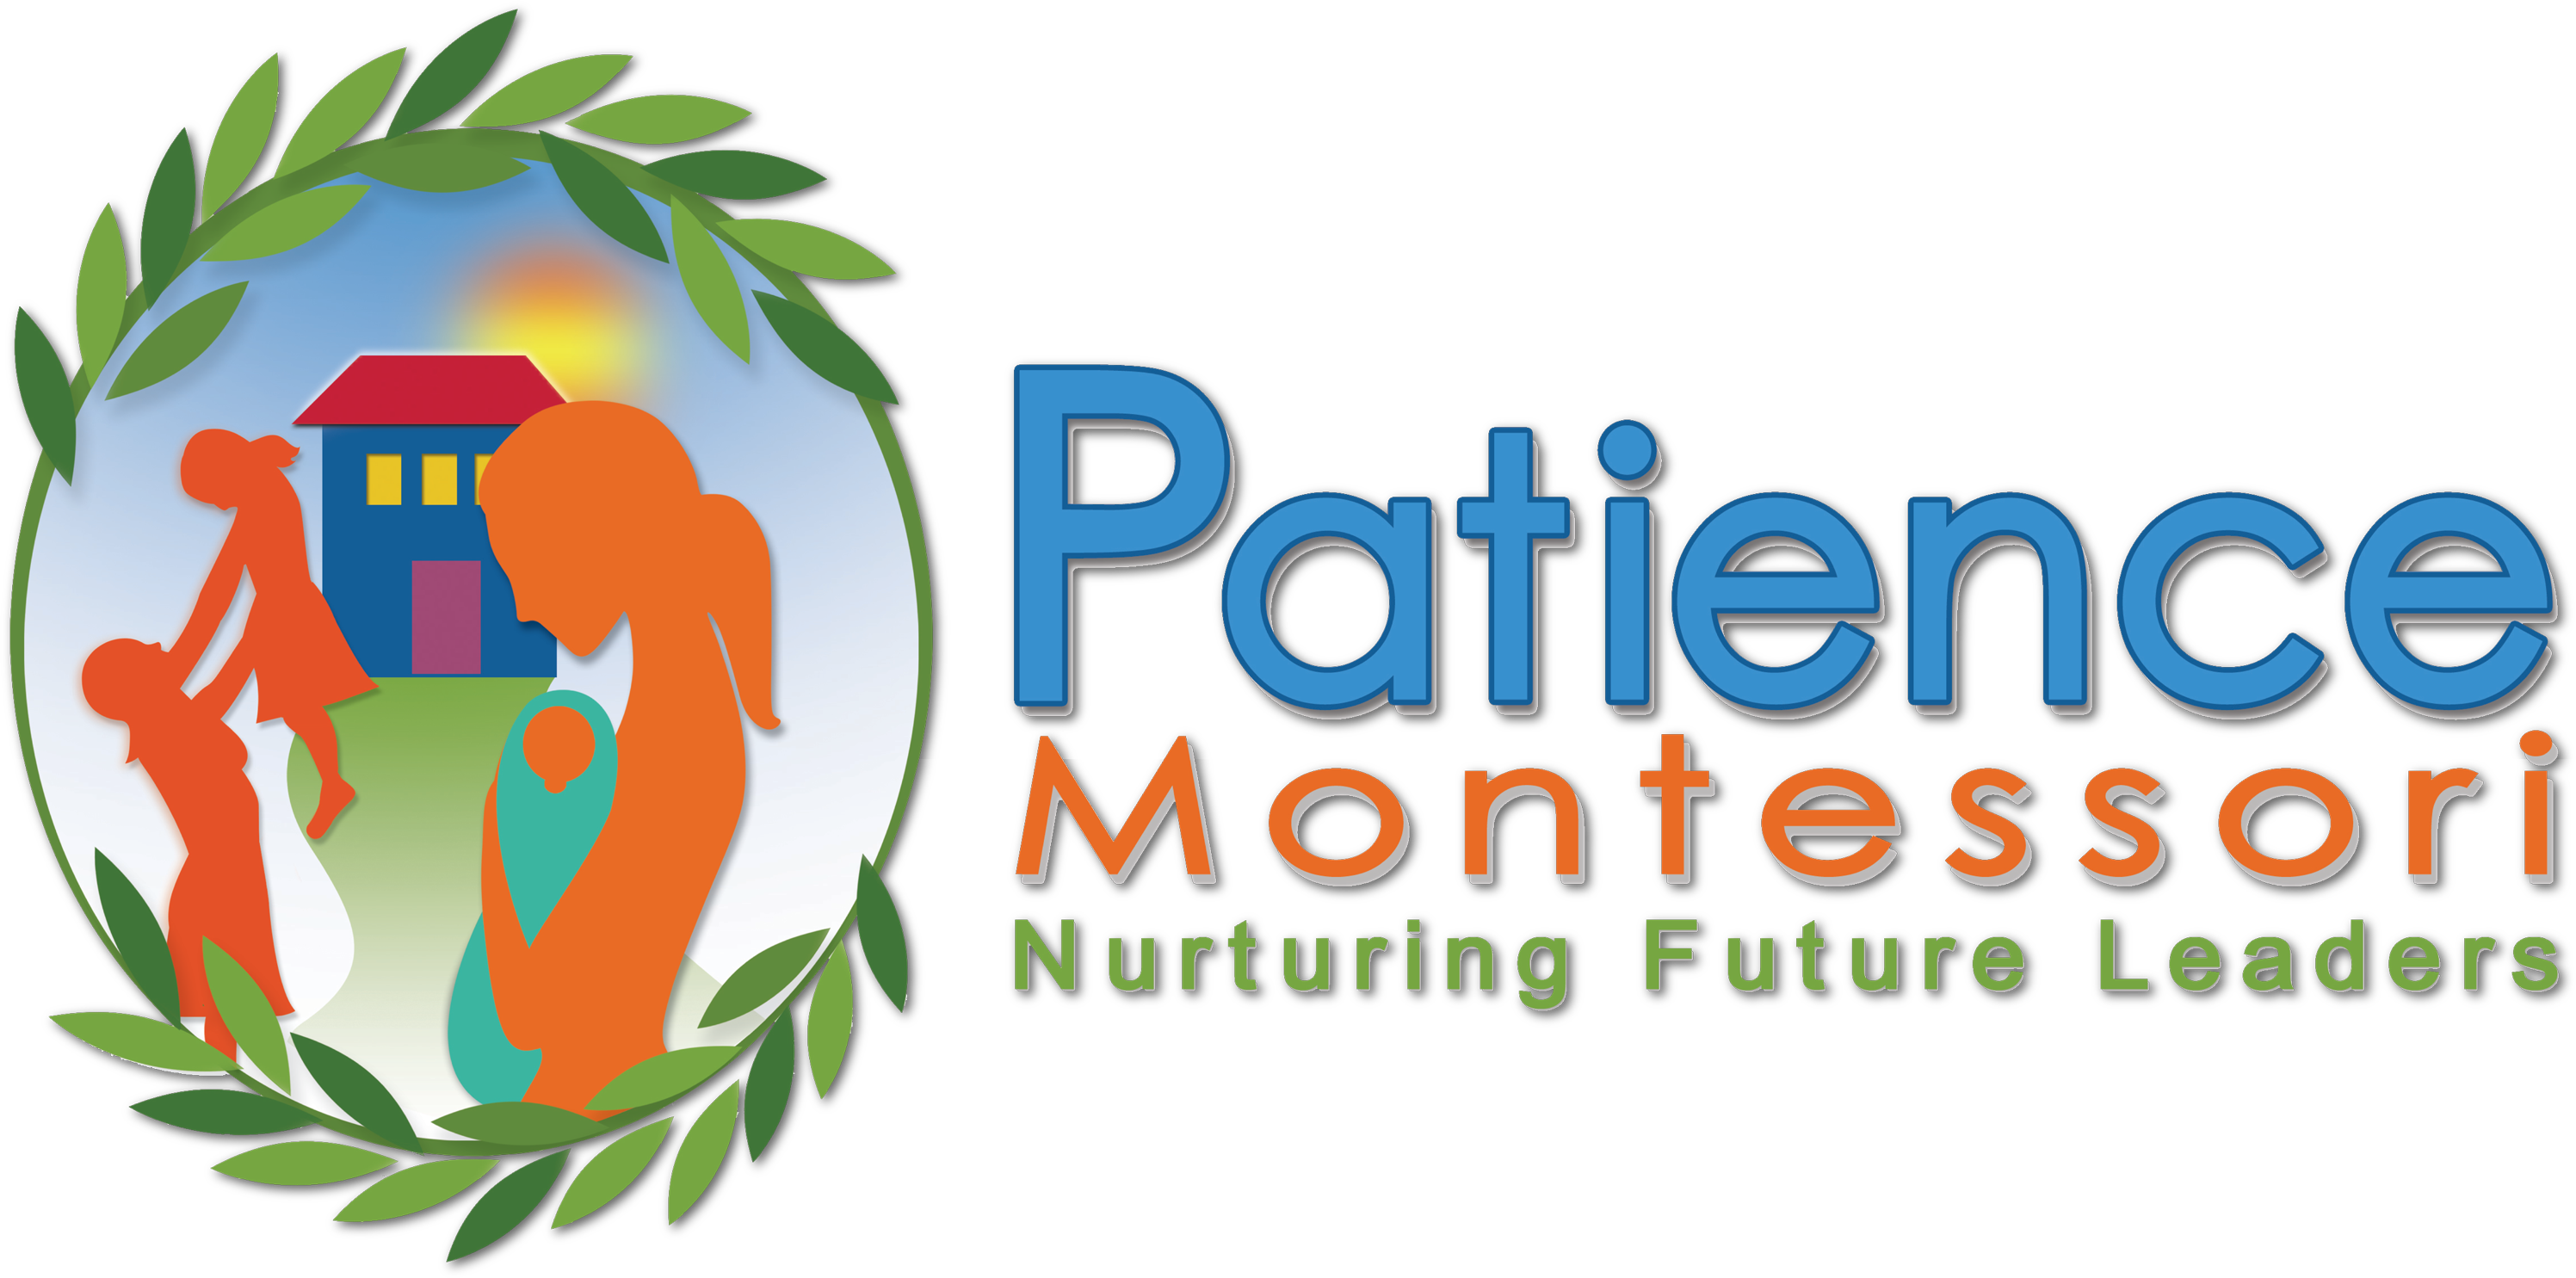 Patience Montessori Logo with Nurturing Future Leaders Tagline